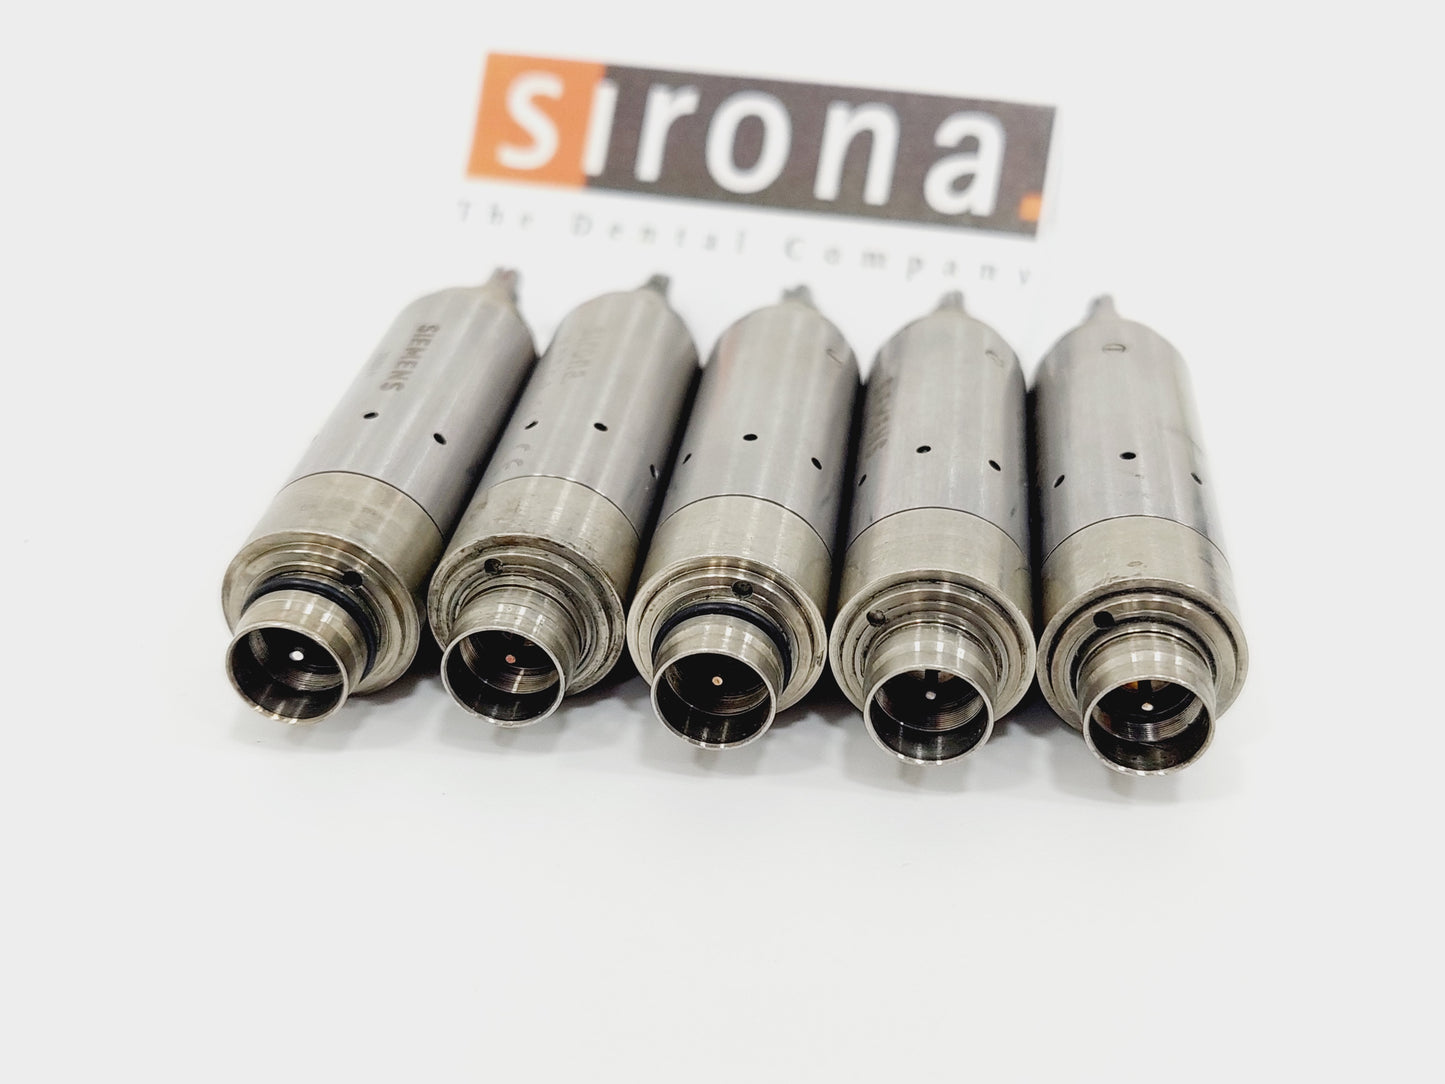 Sirona SL Motor Mikromotor Motorpatrone Für Teneo, M1, C/E Serie